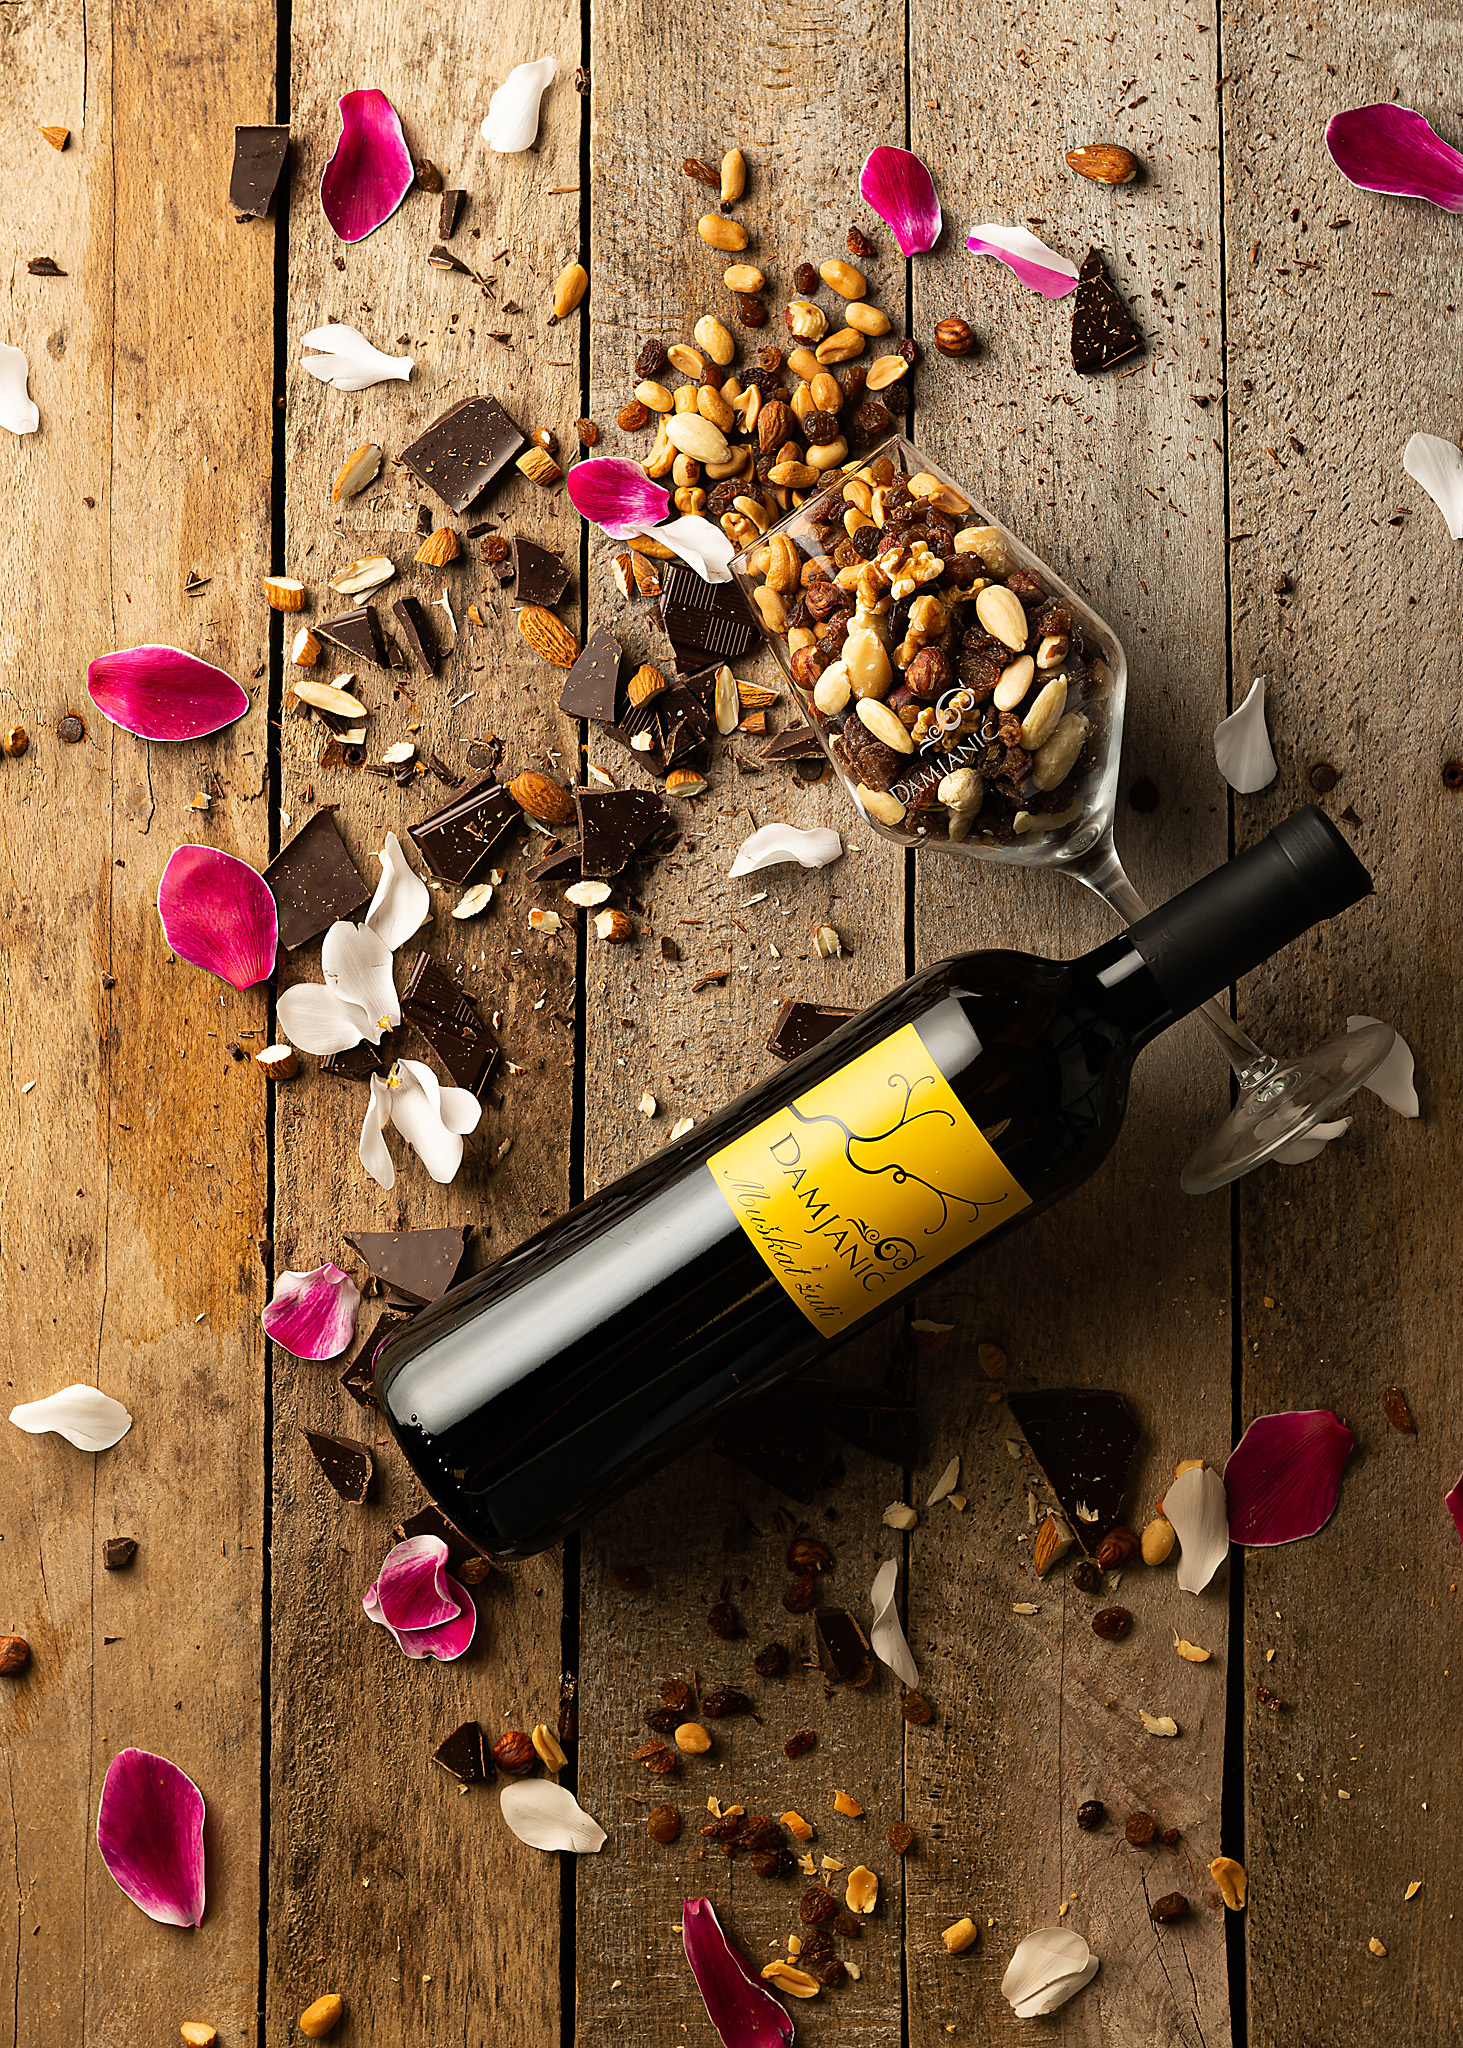 hren | plethora of creativity // Damjanić winery food pairing product photography